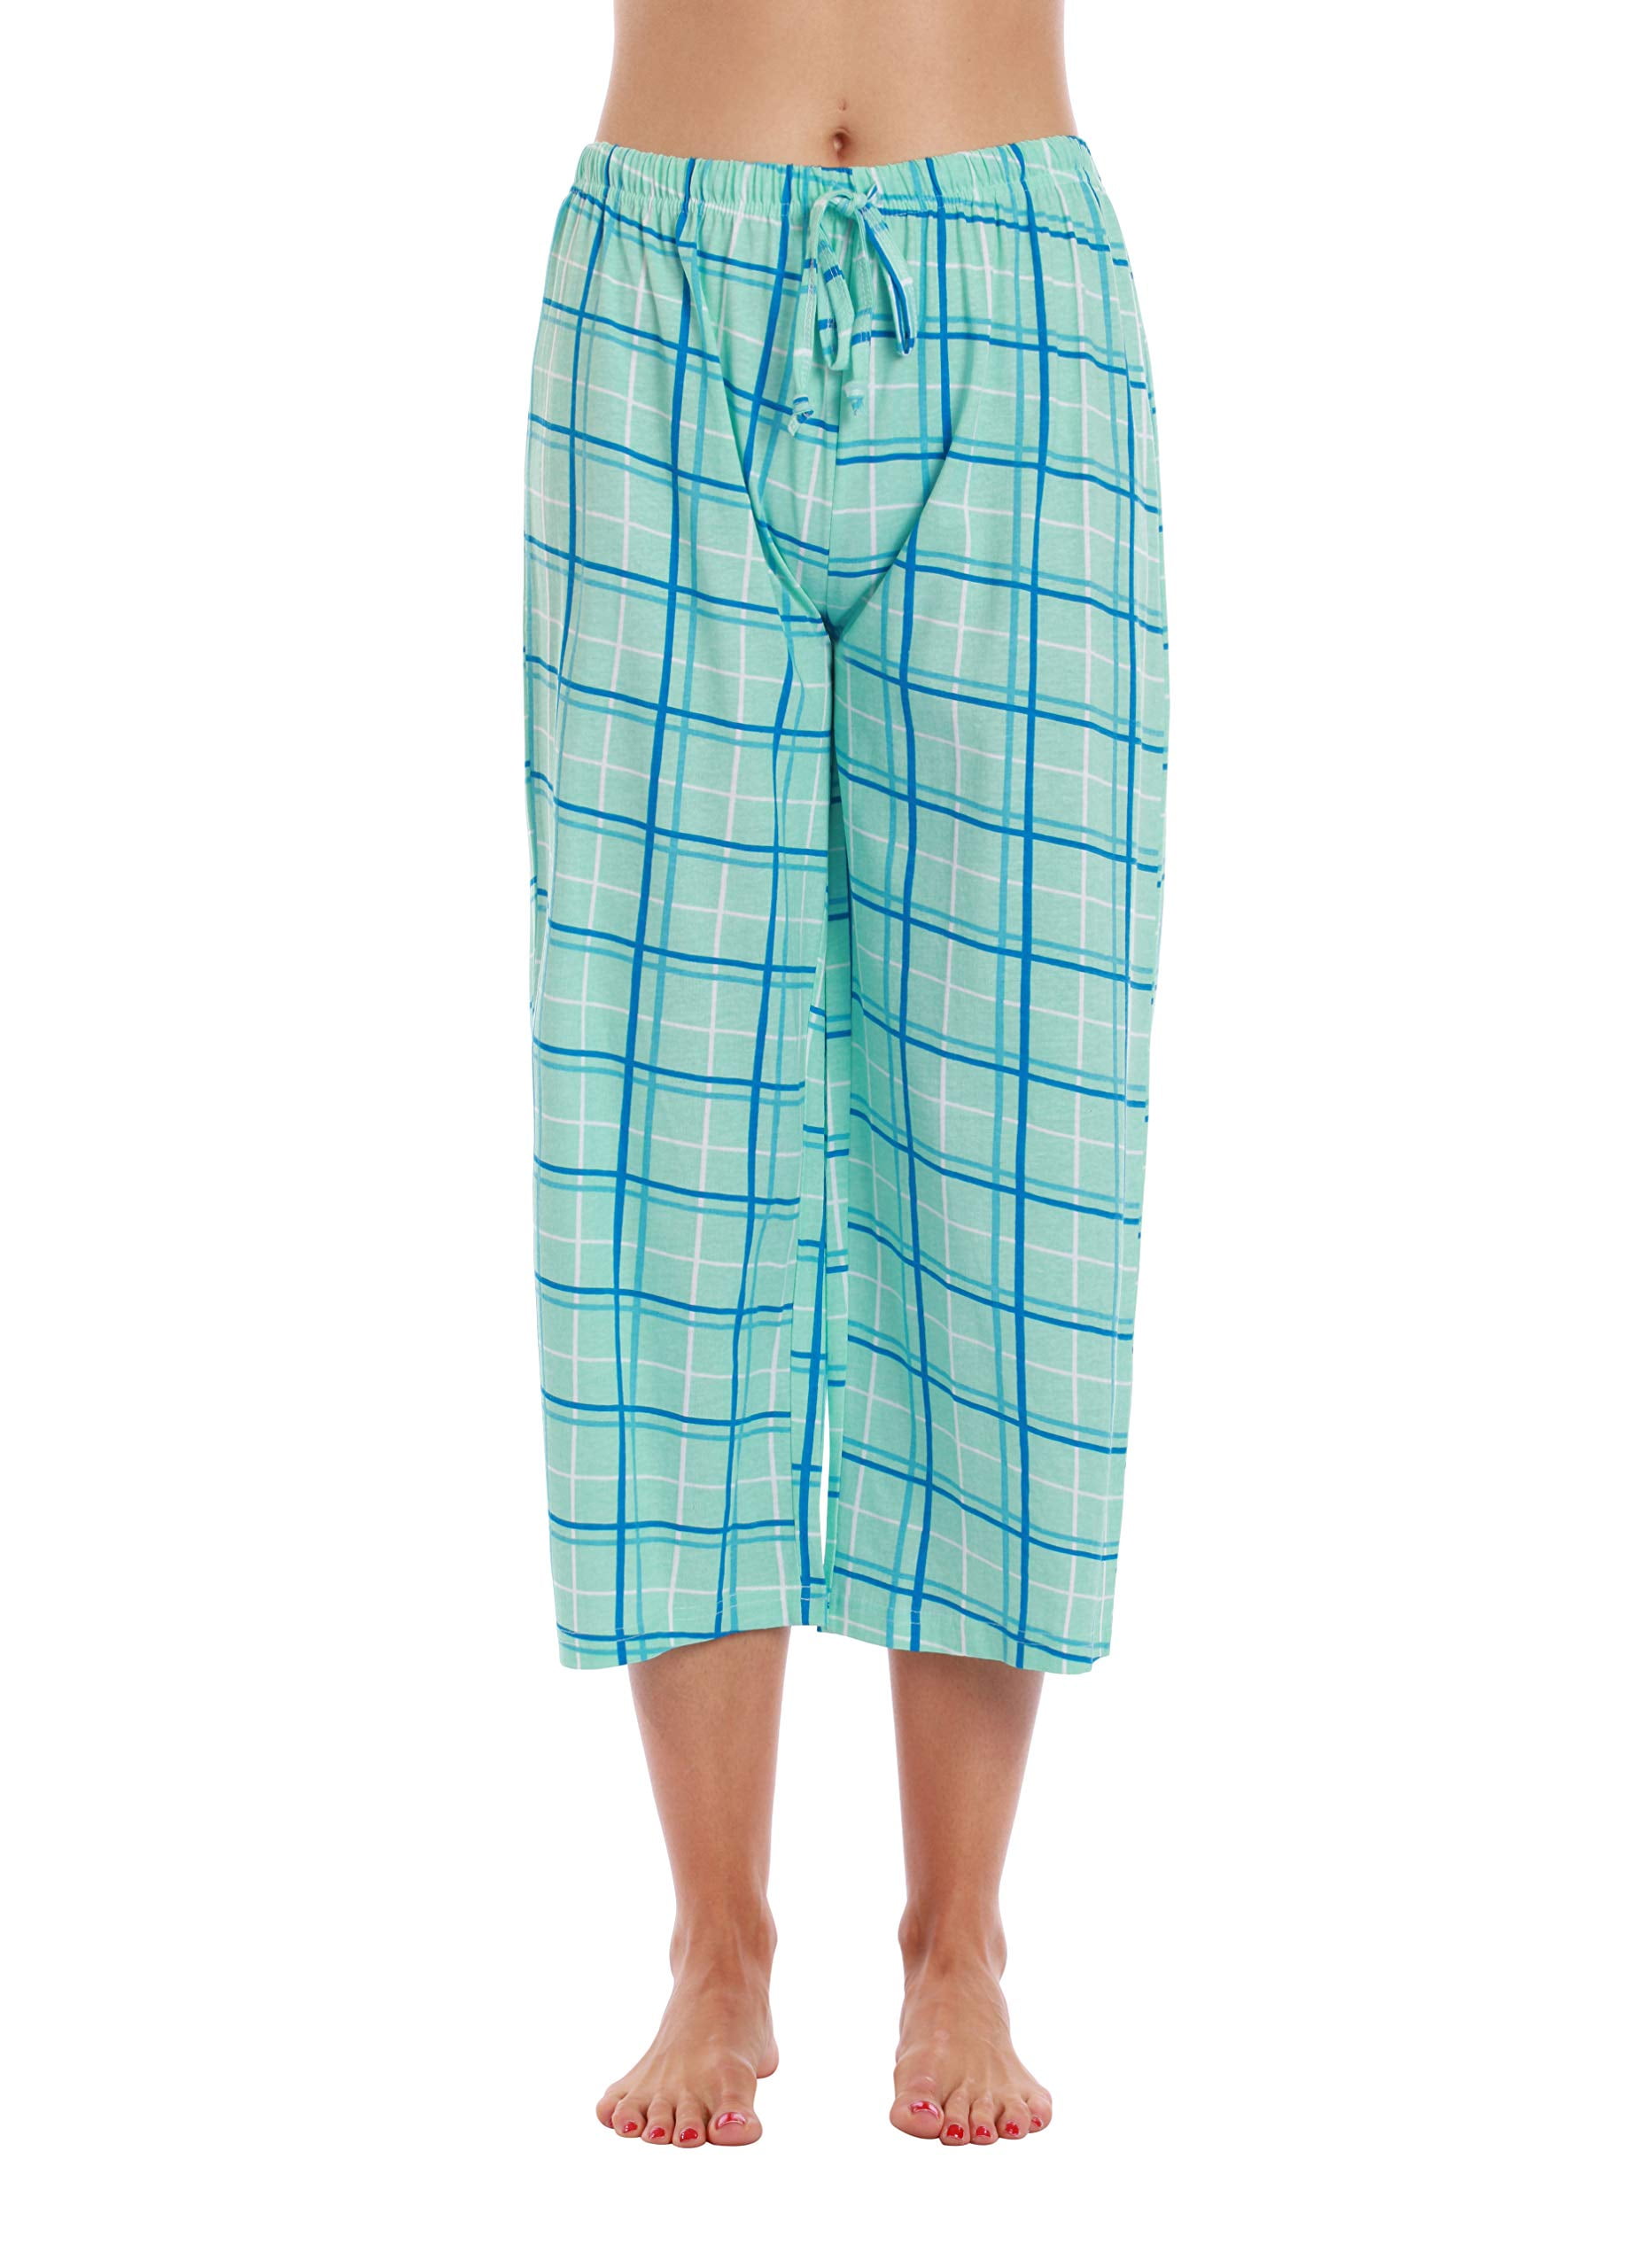 Just Love Womens Pajamas Cotton Capri Set 6329-10385-S - Just Love Fashion